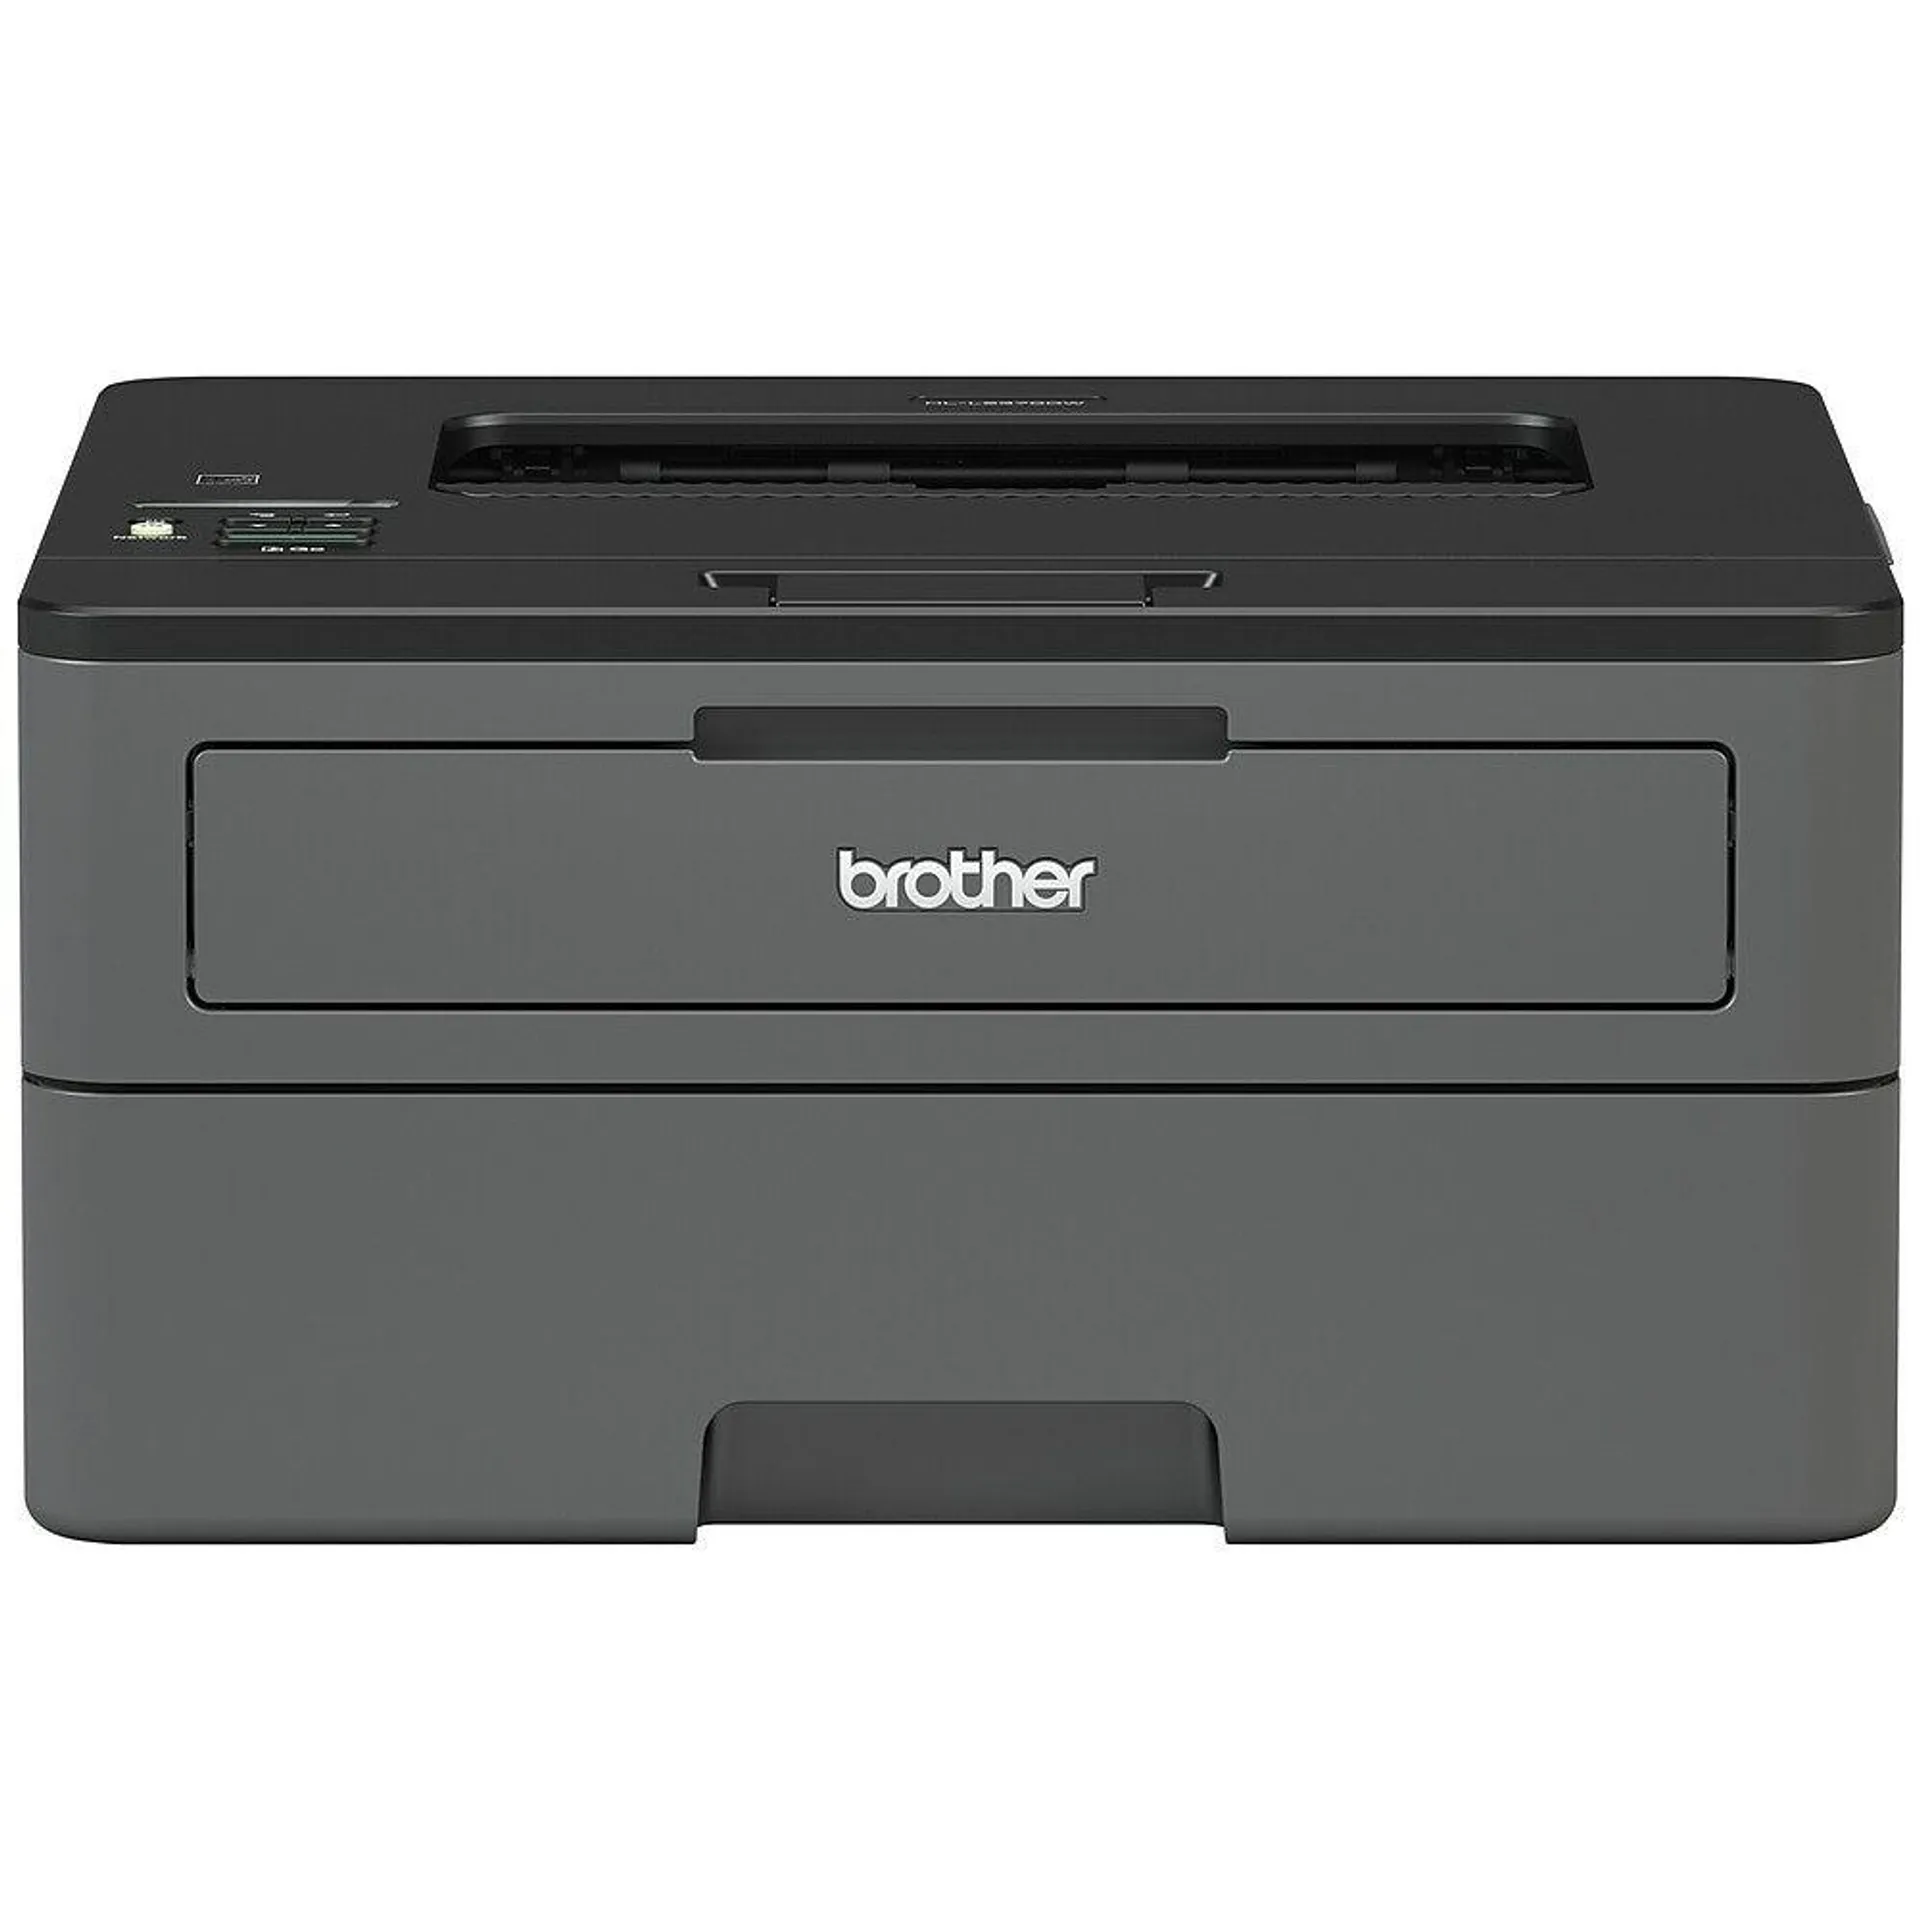 Brother HL-L2370DW Wireless Monochrome Laser Printer